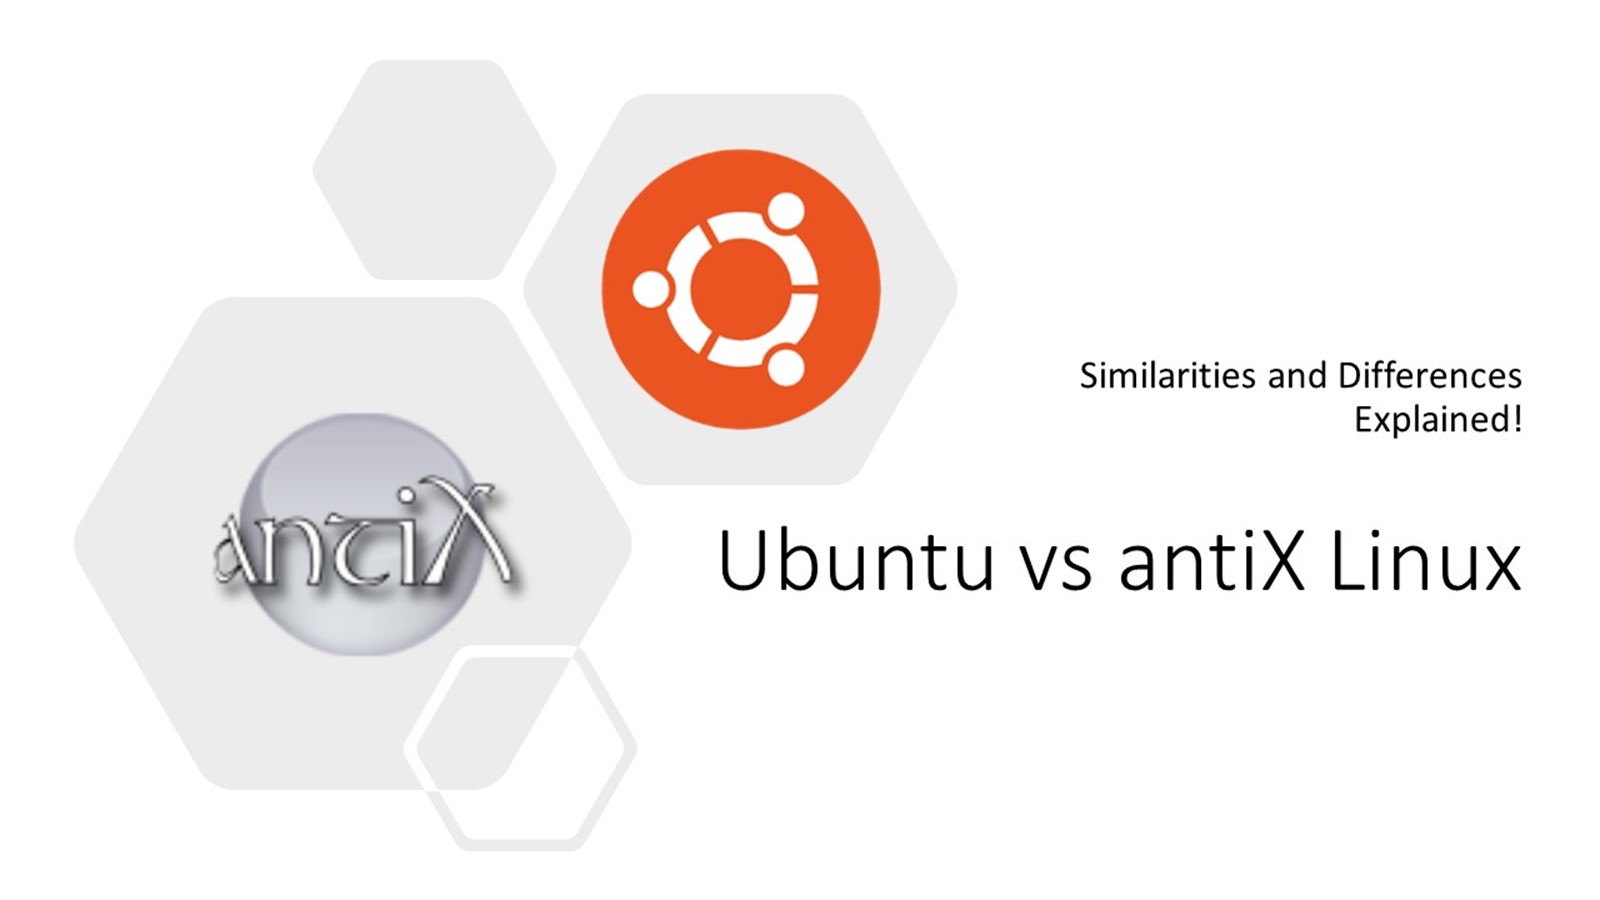 Ubuntu vs antiX: Similarities & Differences!